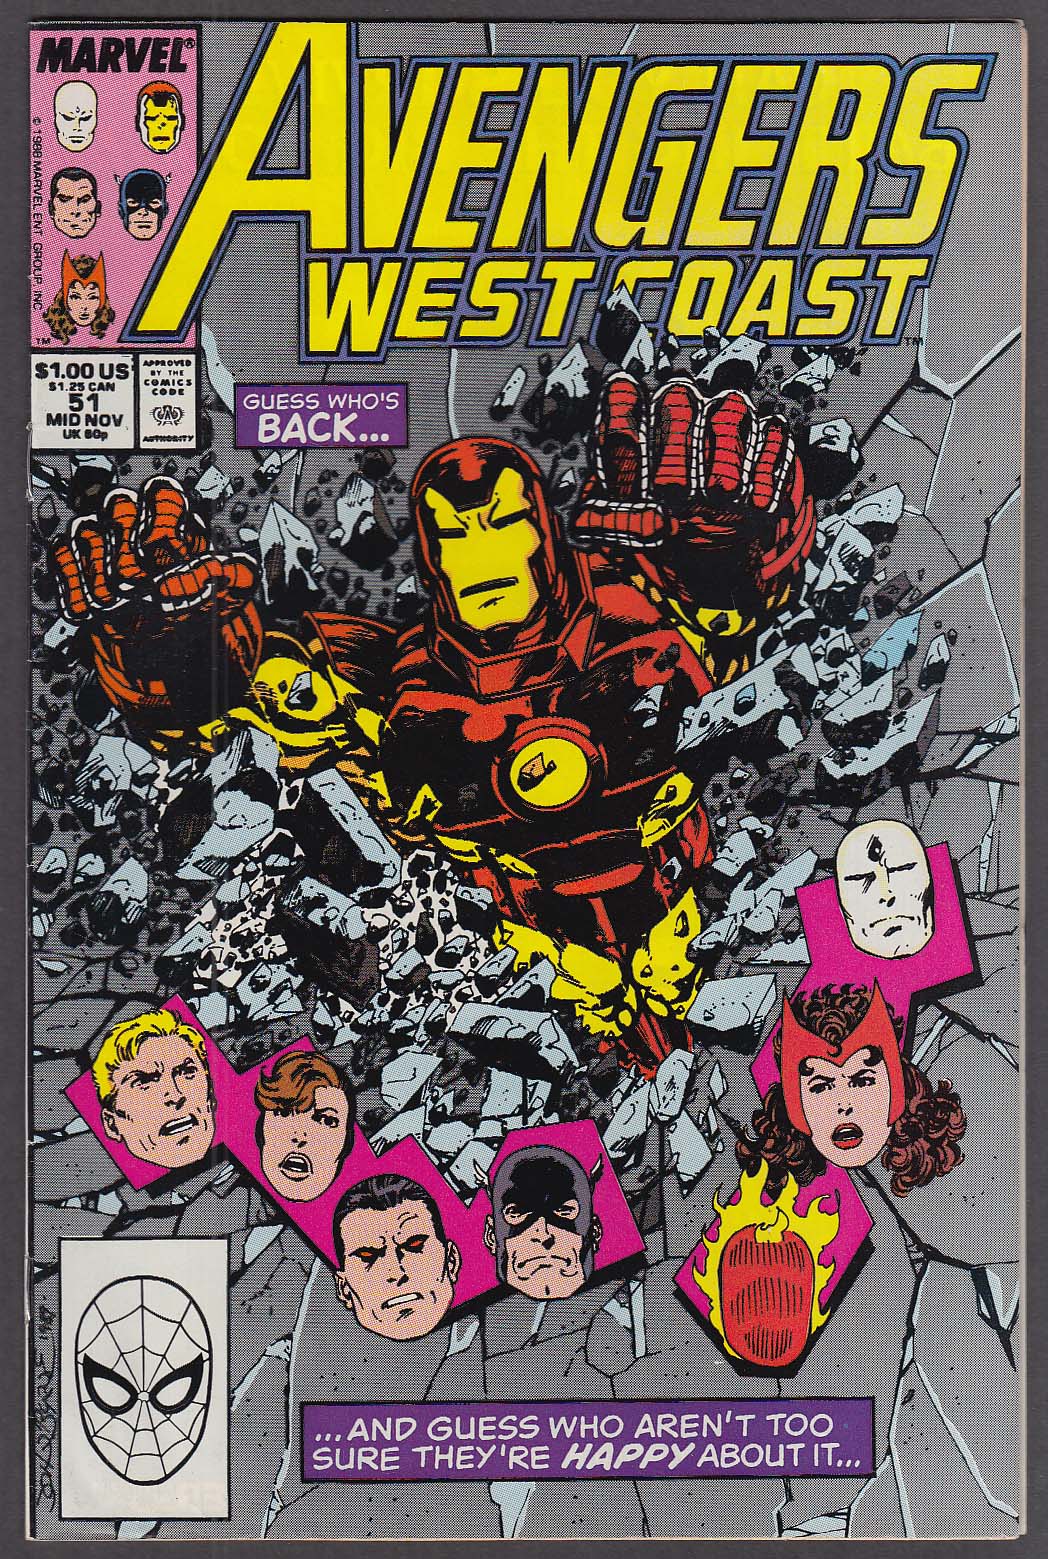 AVENGERS WEST COAST #51 Marvel comic book 11 1989